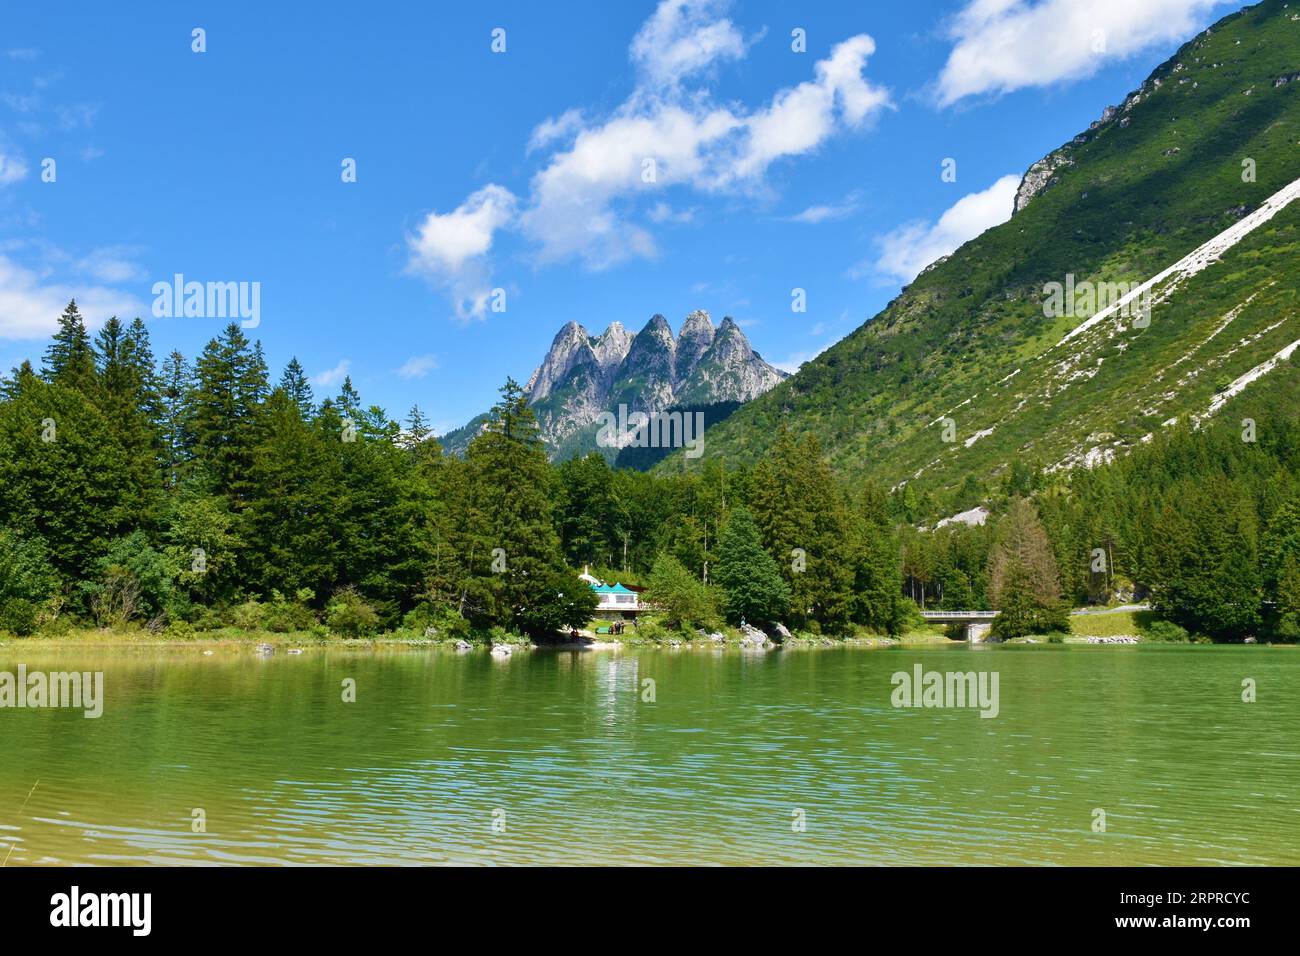 Peaks of Cinque Punte mountain and Lago del Predil lake near Tarvisio, Italy Stock Photo